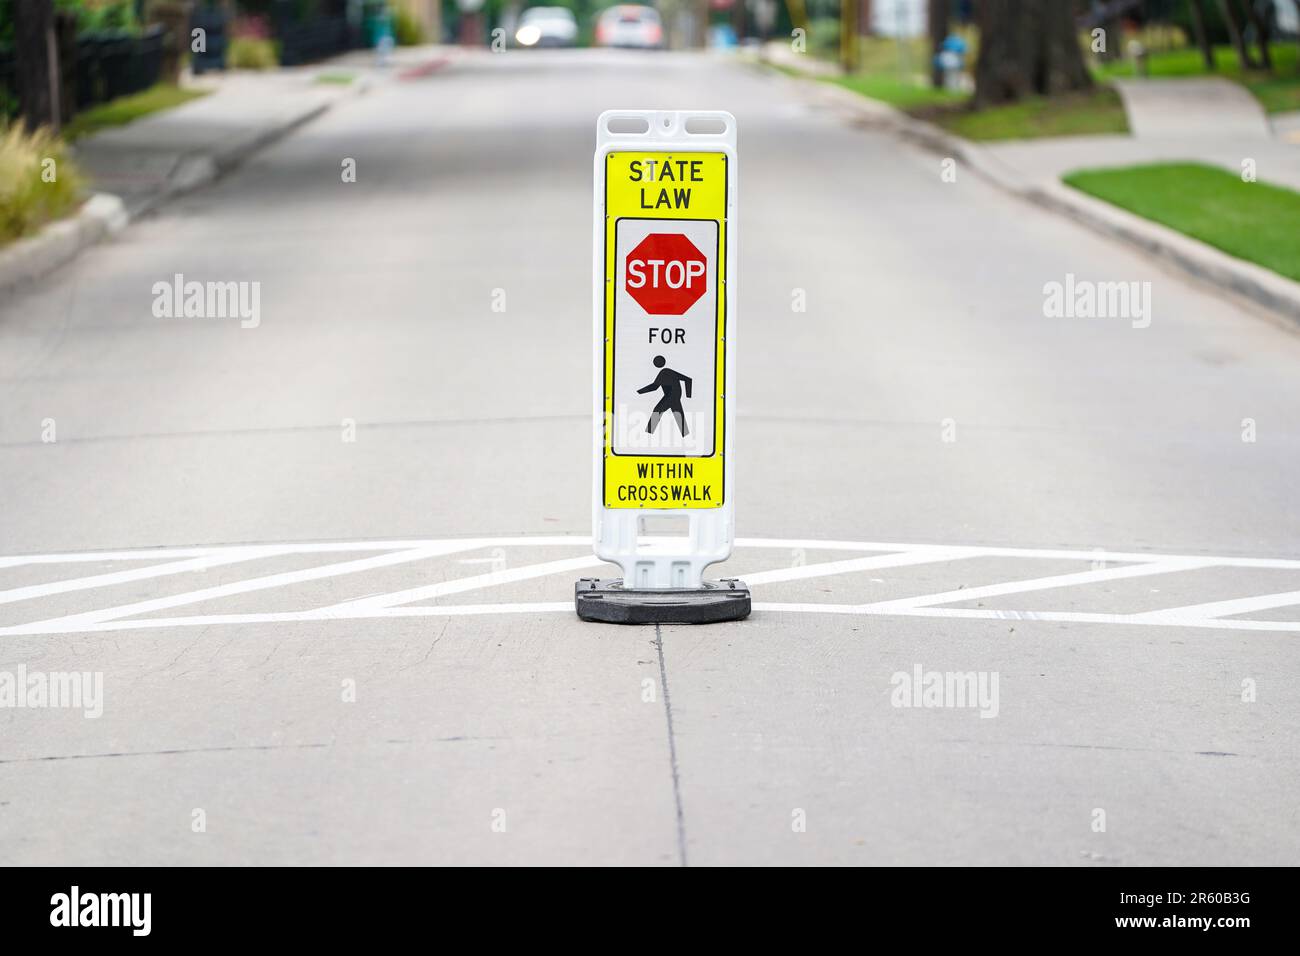 State Law Pedestrian Crosswalk Sign on a busy street in a neighborhood Stock Photo